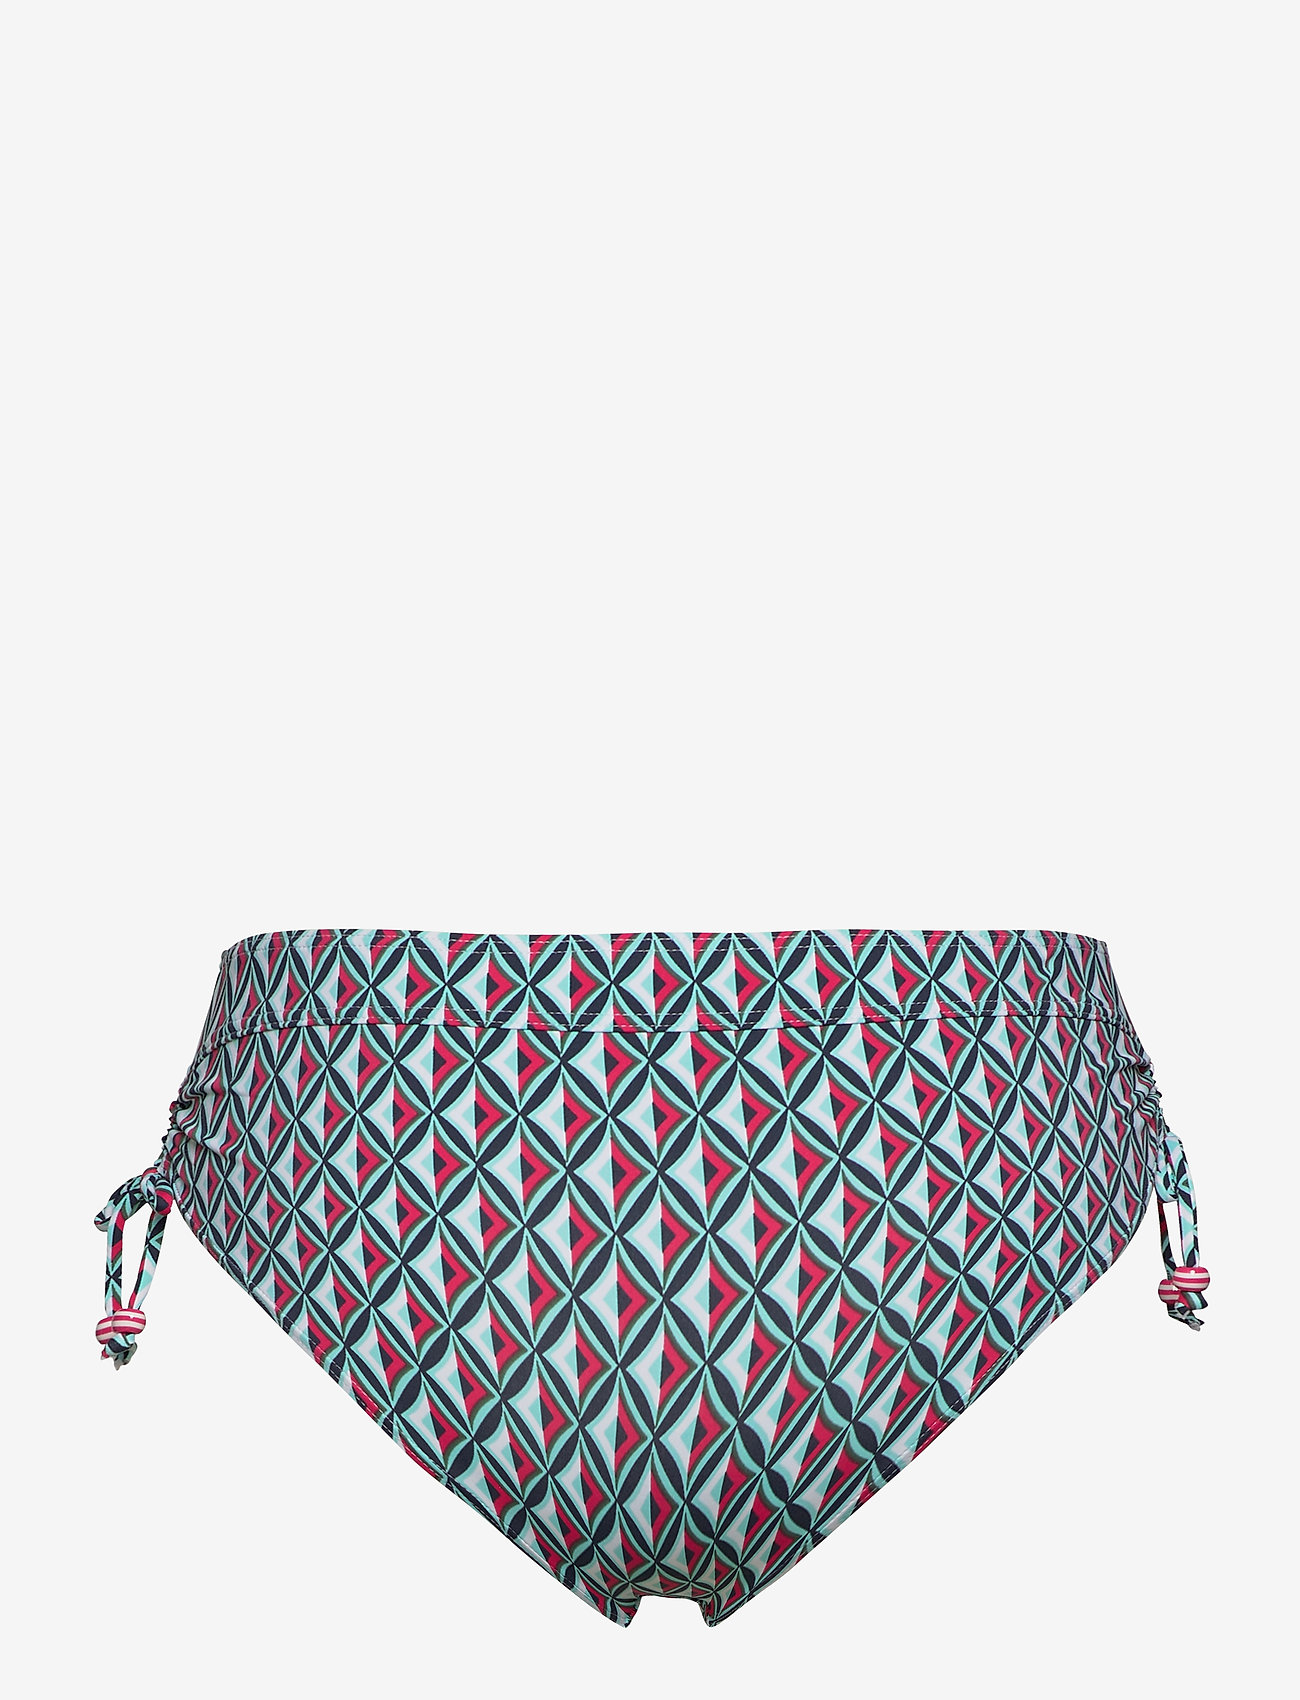 Esprit Bodywear Women - Midi briefs with a retro print - side tie bikinitrosor - pink fuchsia - 1